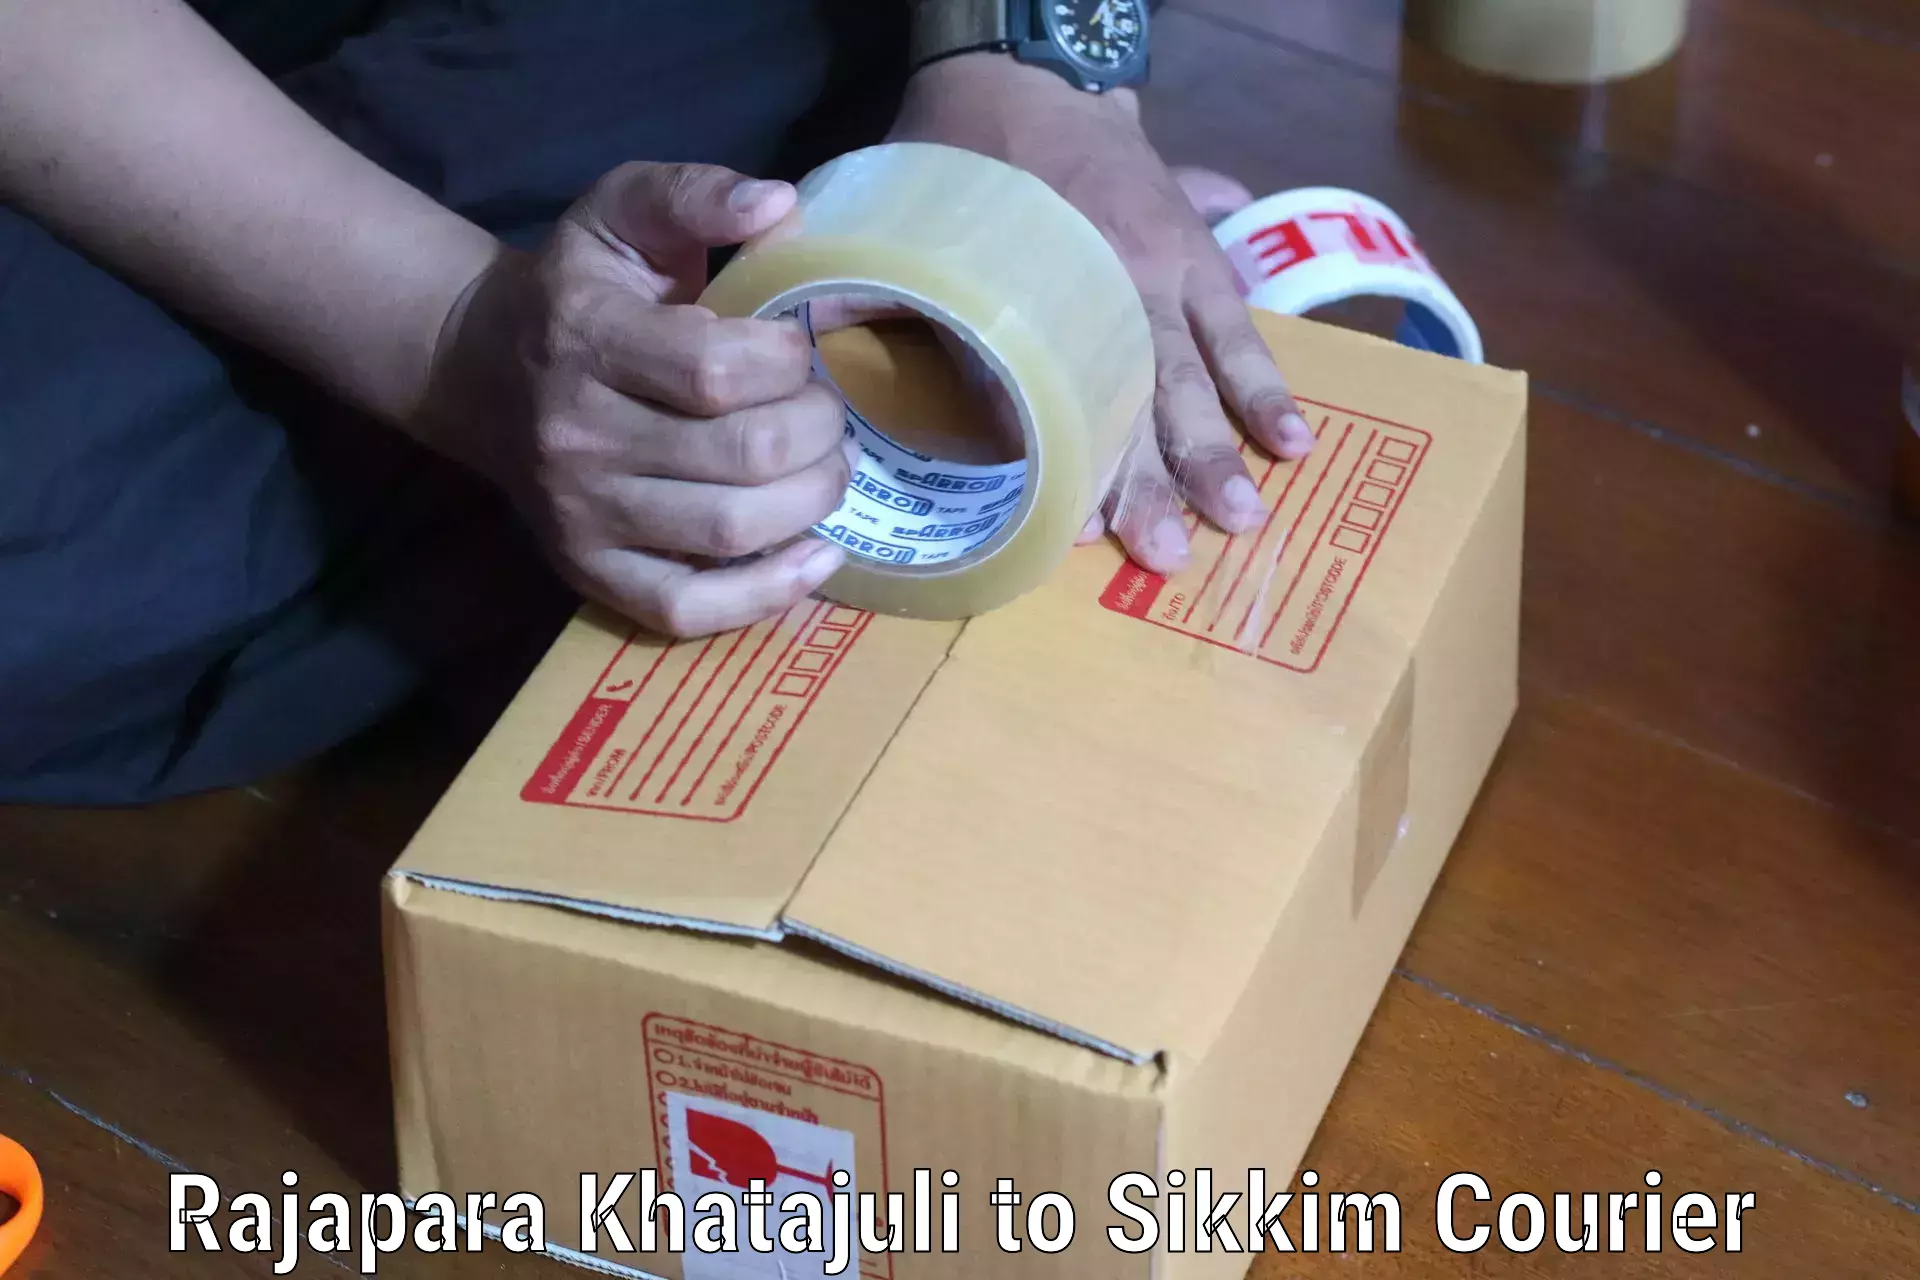 Courier service comparison Rajapara Khatajuli to North Sikkim